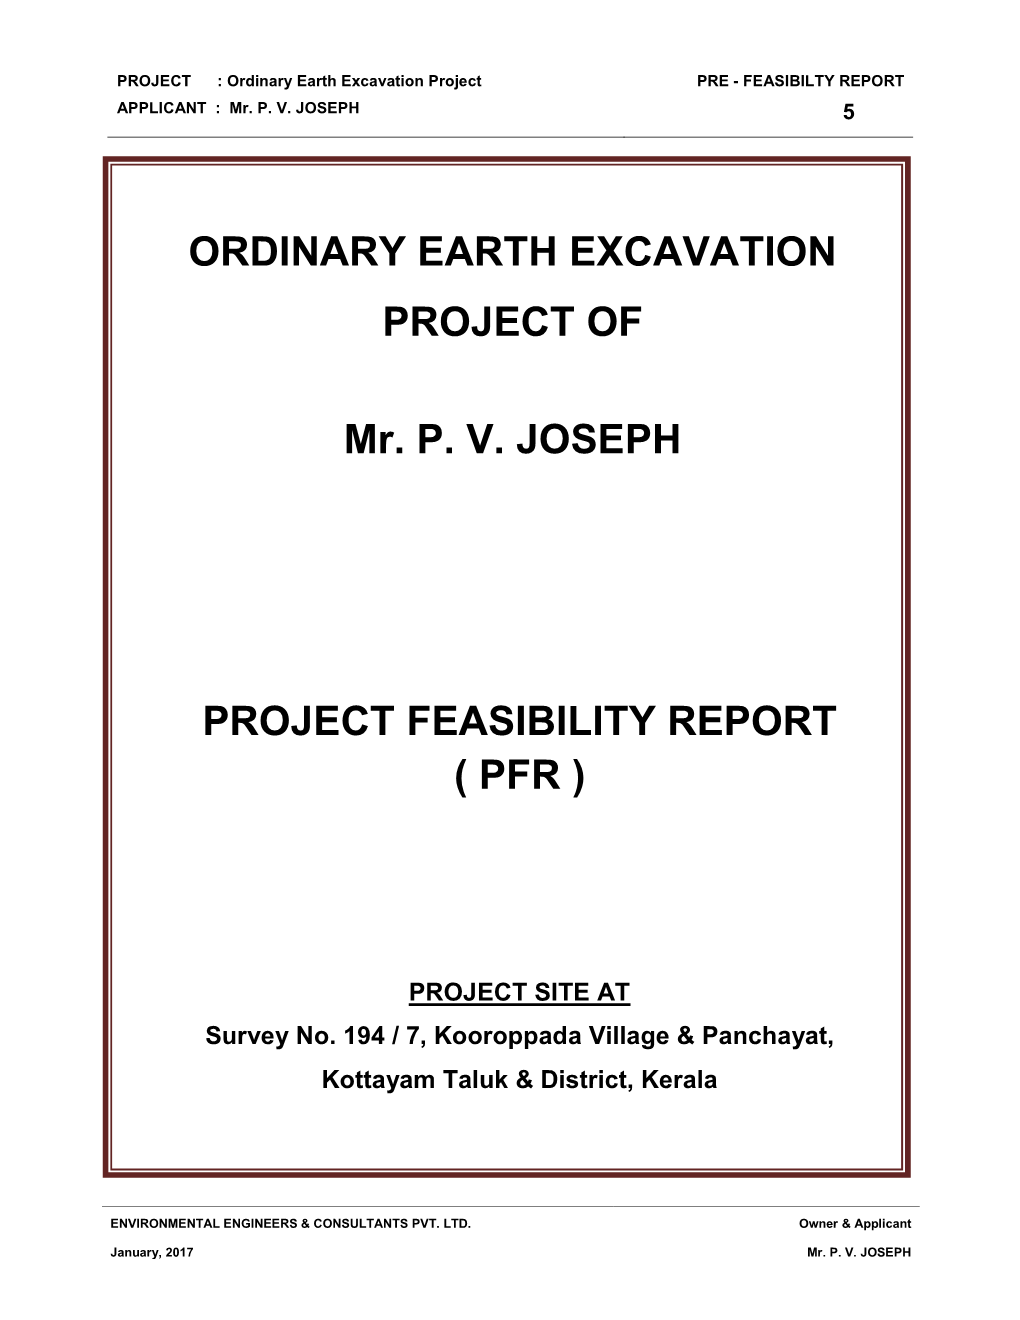 ORDINARY EARTH EXCAVATION PROJECT of Mr. P. V. JOSEPH